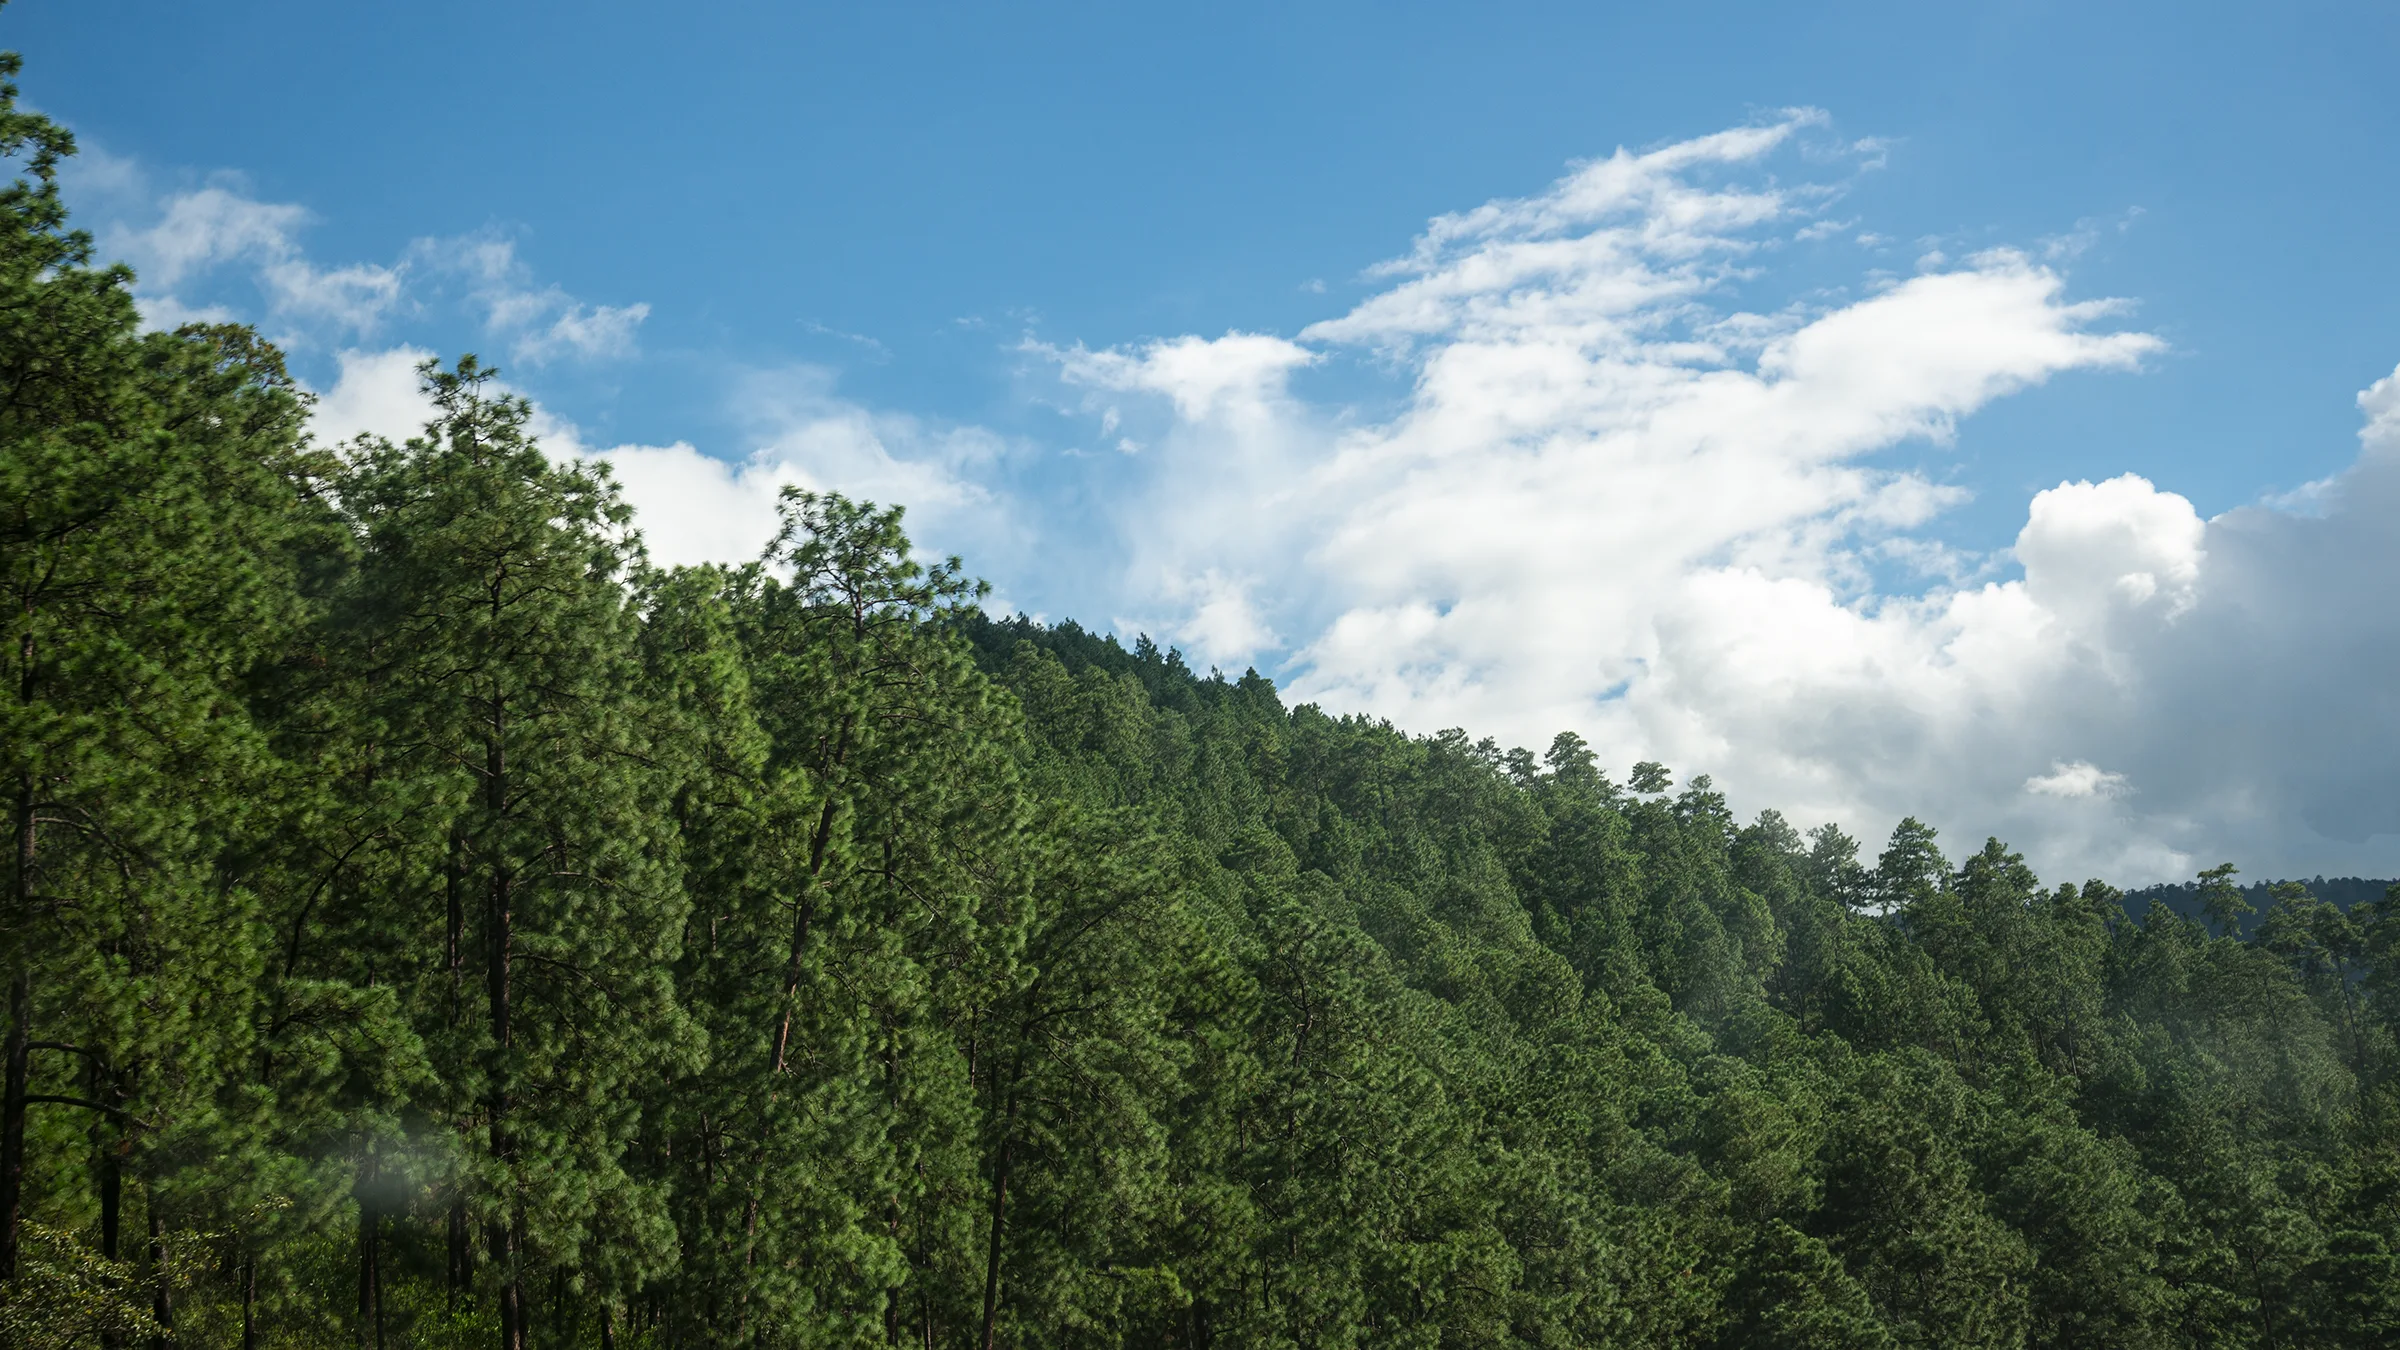 The Pine – National Tree of Honduras